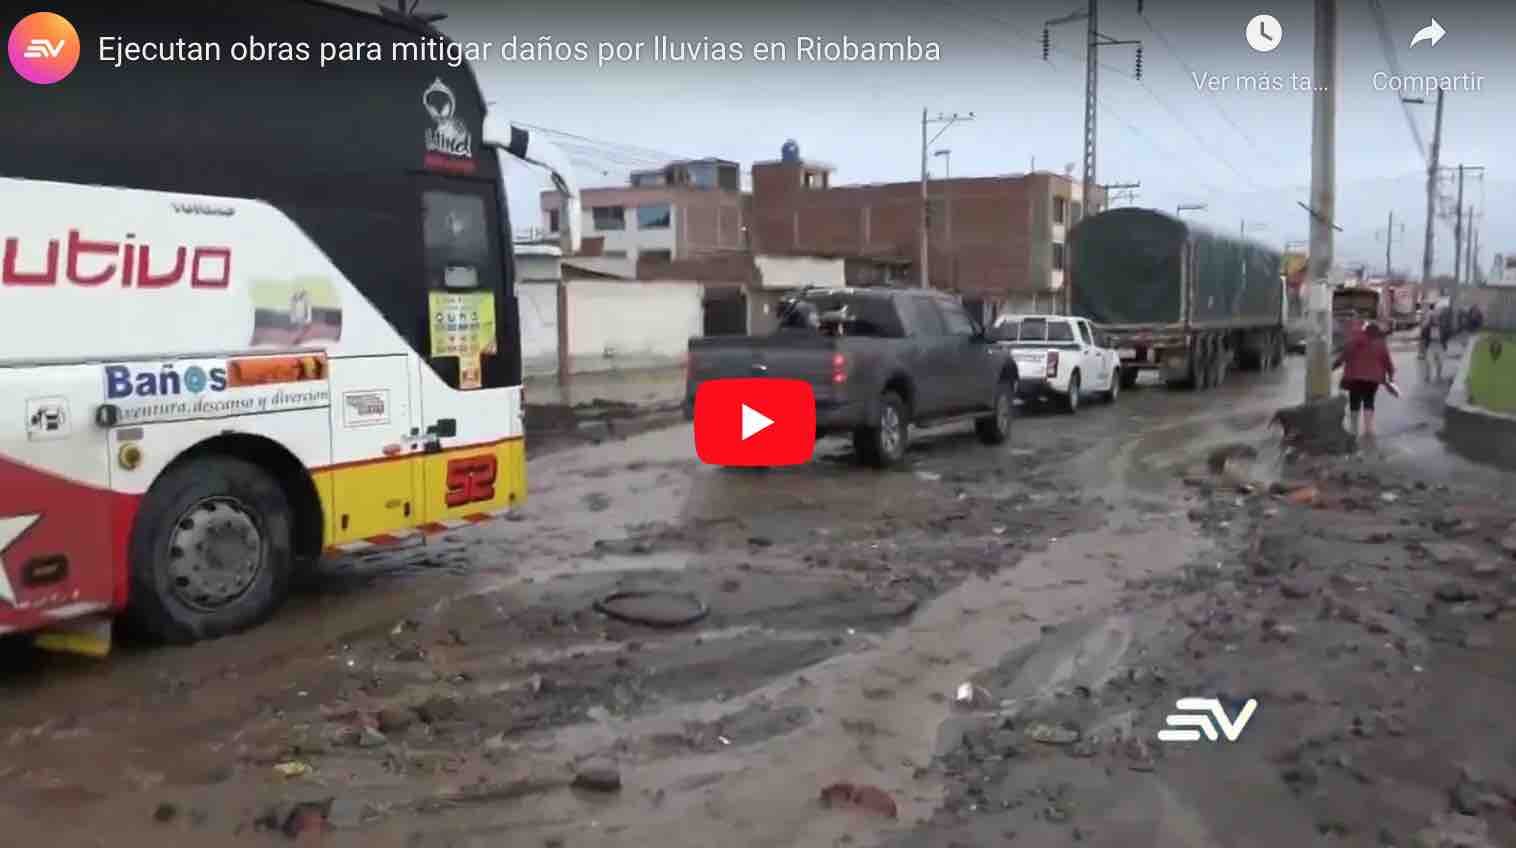 VIDEO: Ejecutan obras para mitigar daños por lluvias en Riobamba